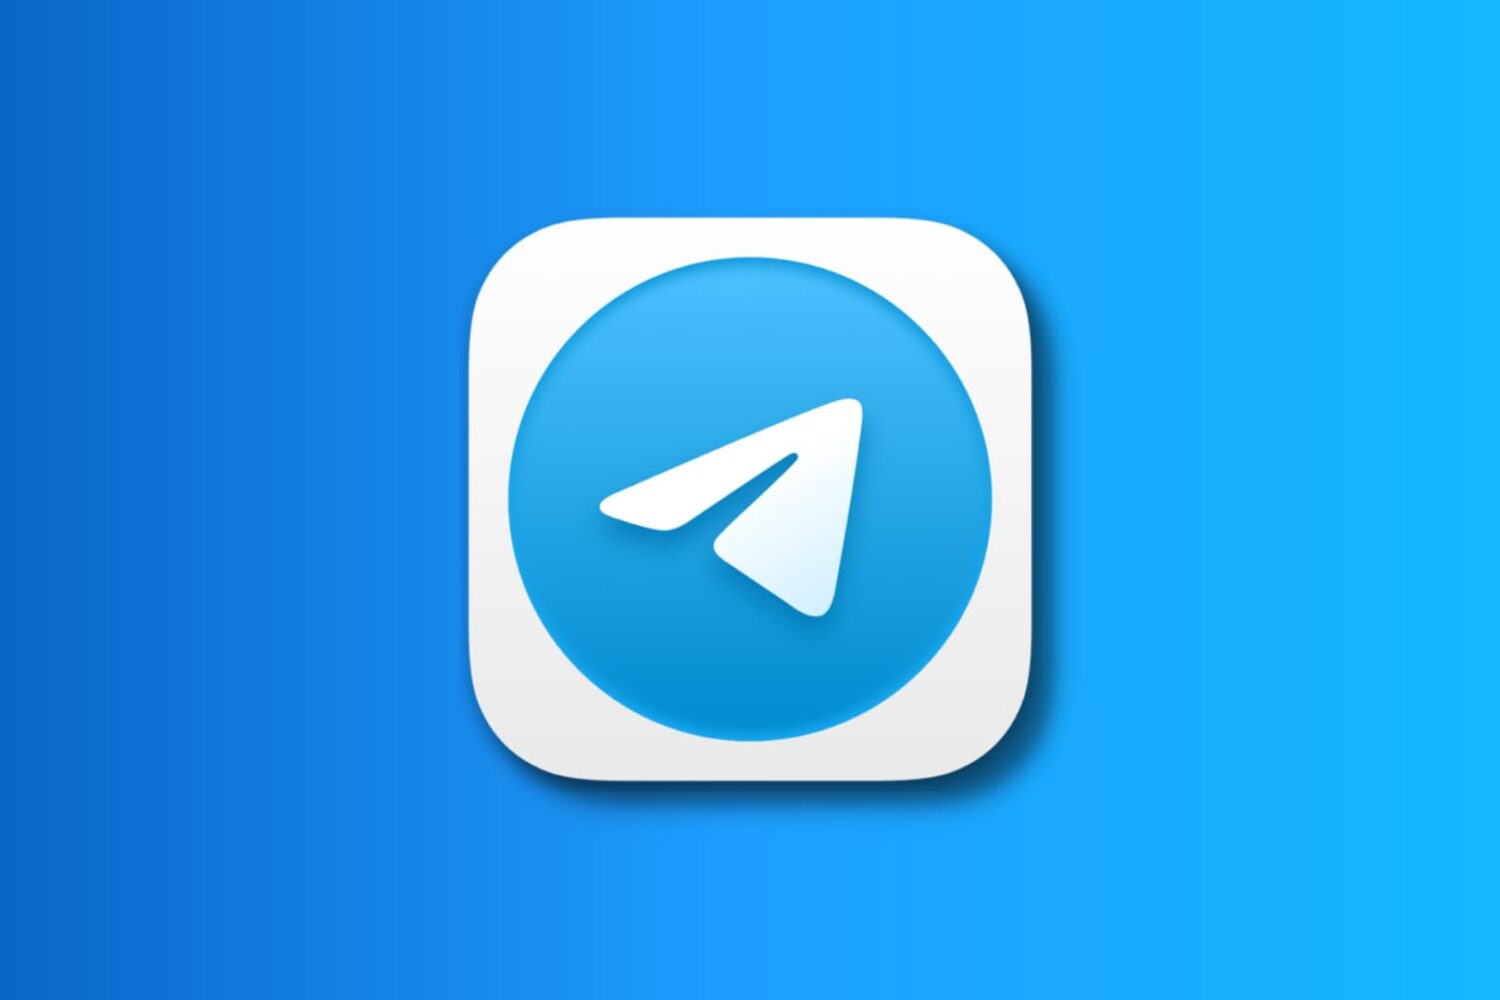 Telegram app icon on a gradient blue background